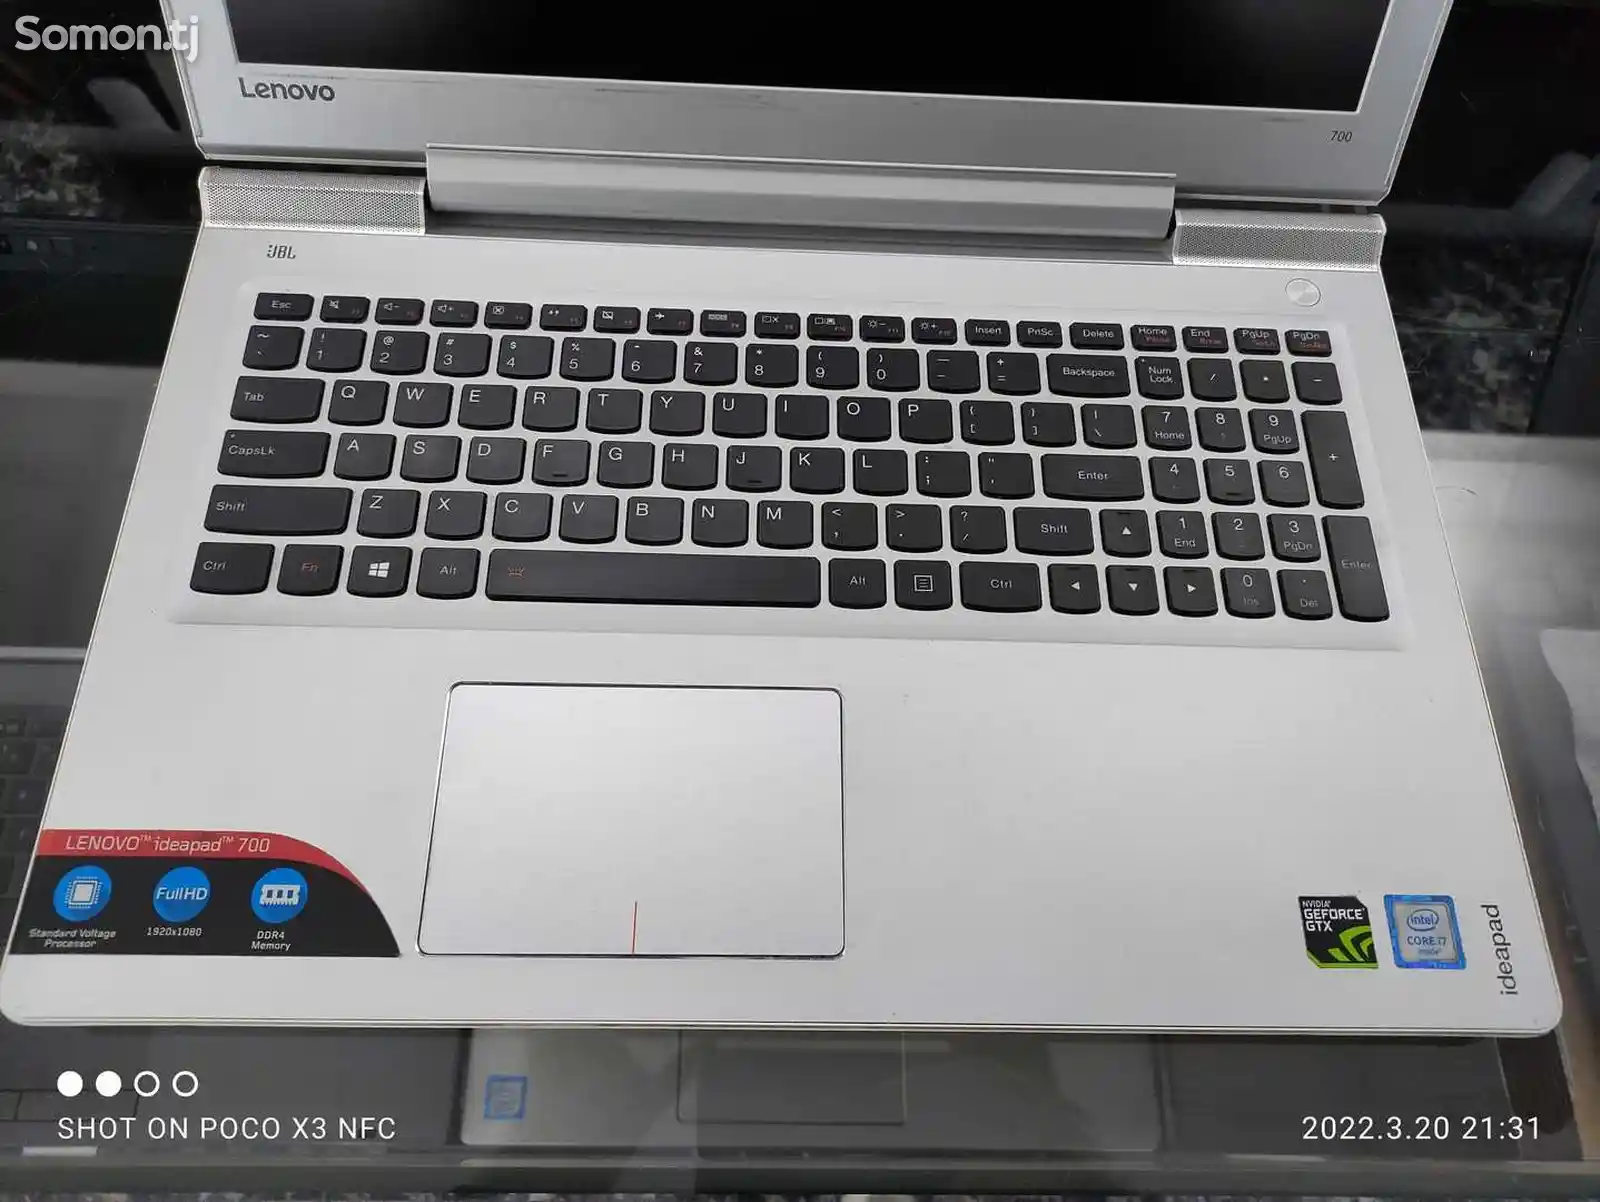 Игровой Ноутбук Lenovo Ideapad 700 Core i7-6700HQ GTX 950M 2GB-4